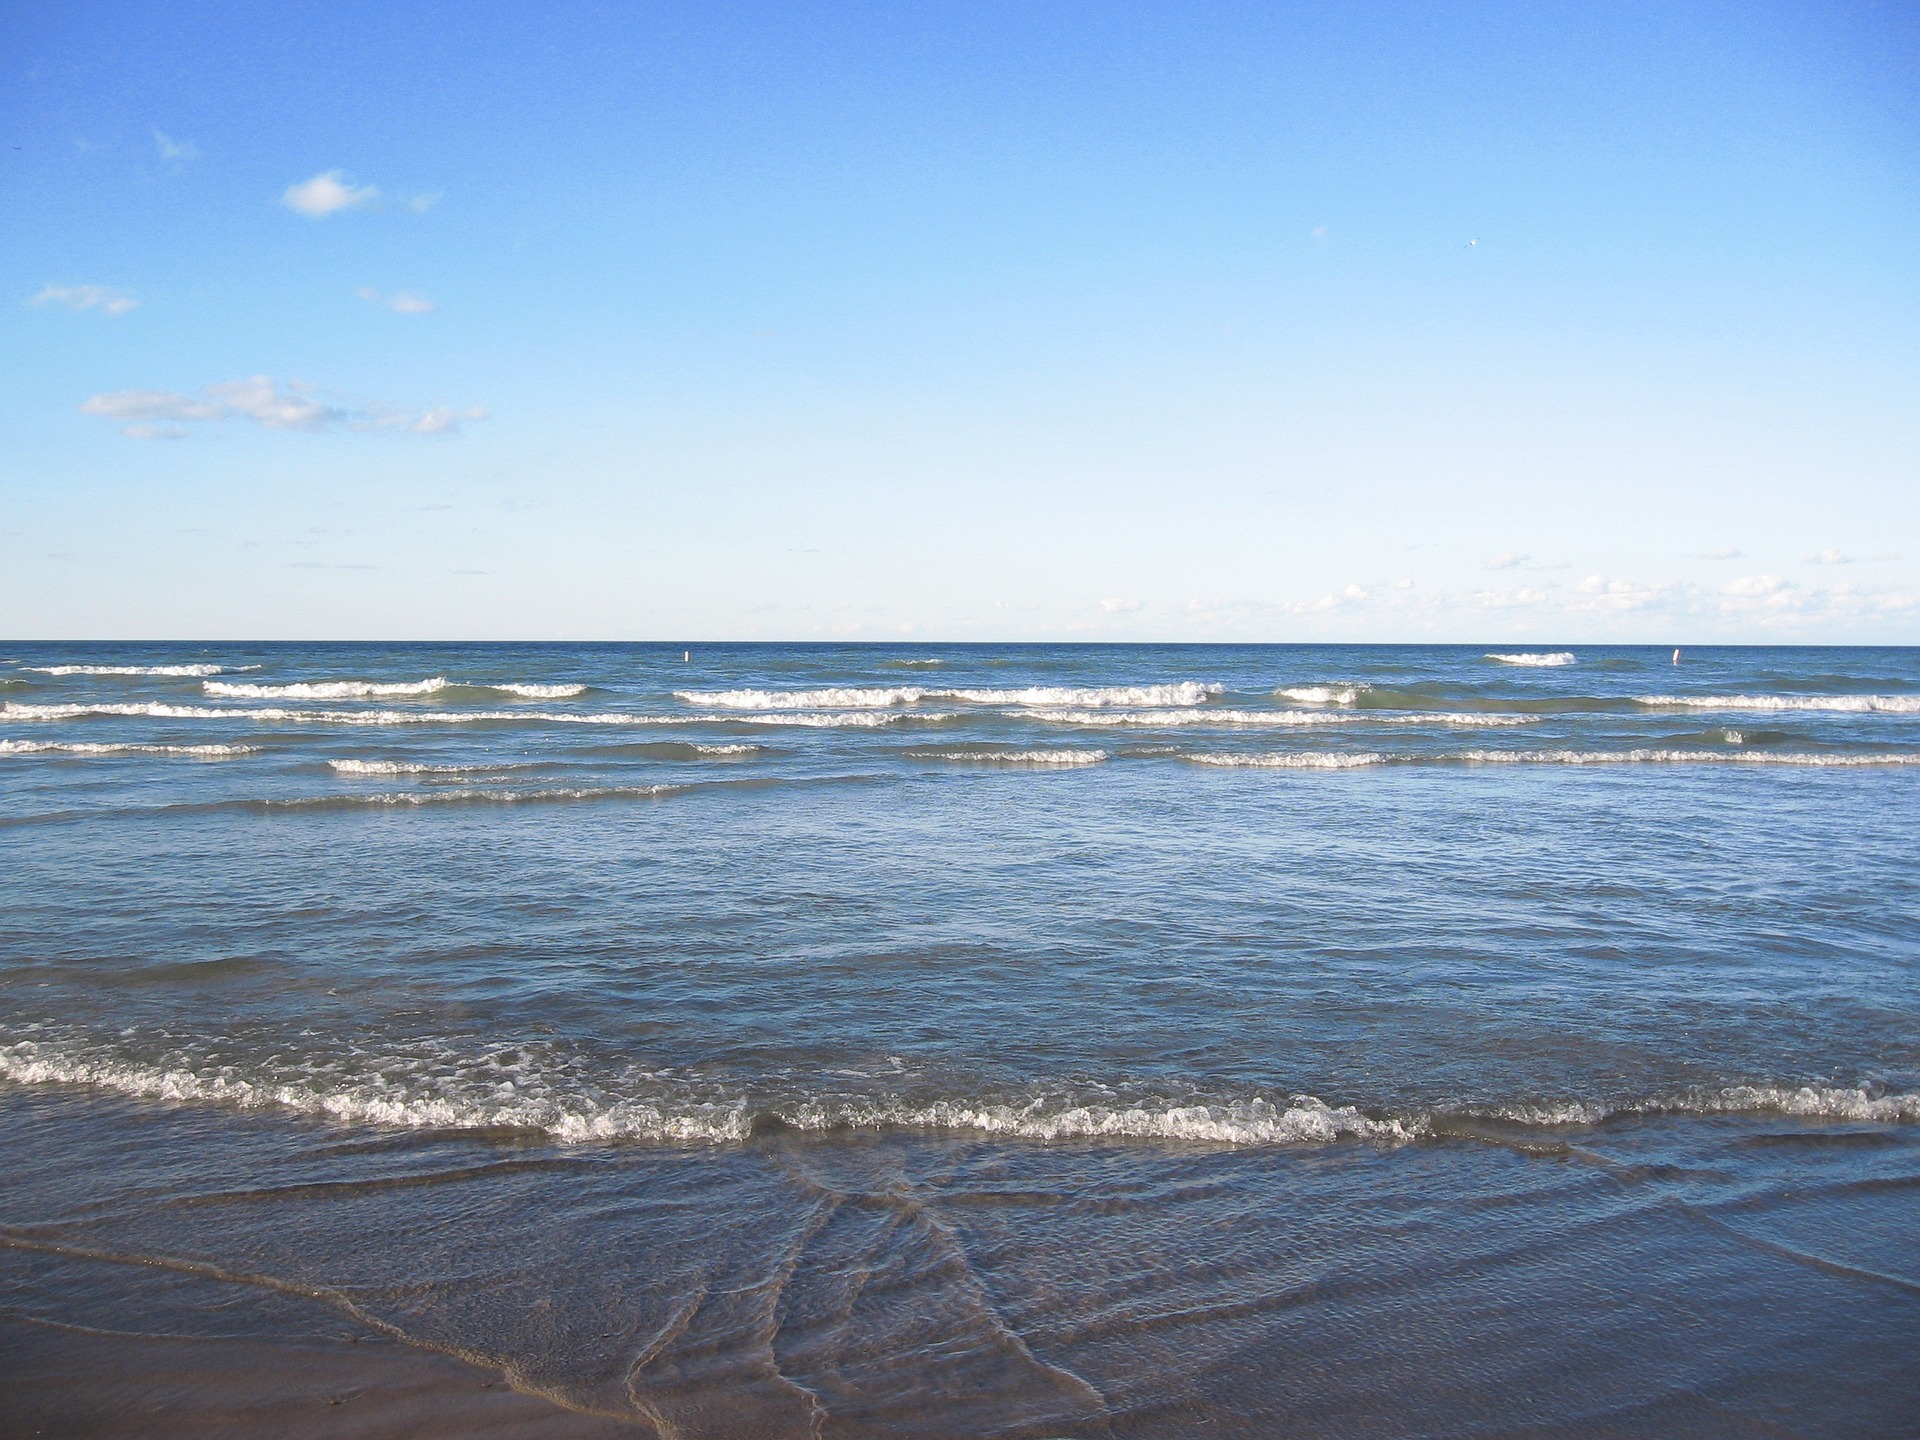 Lake Michigan Shoreline Image by 363730 from Pixabay